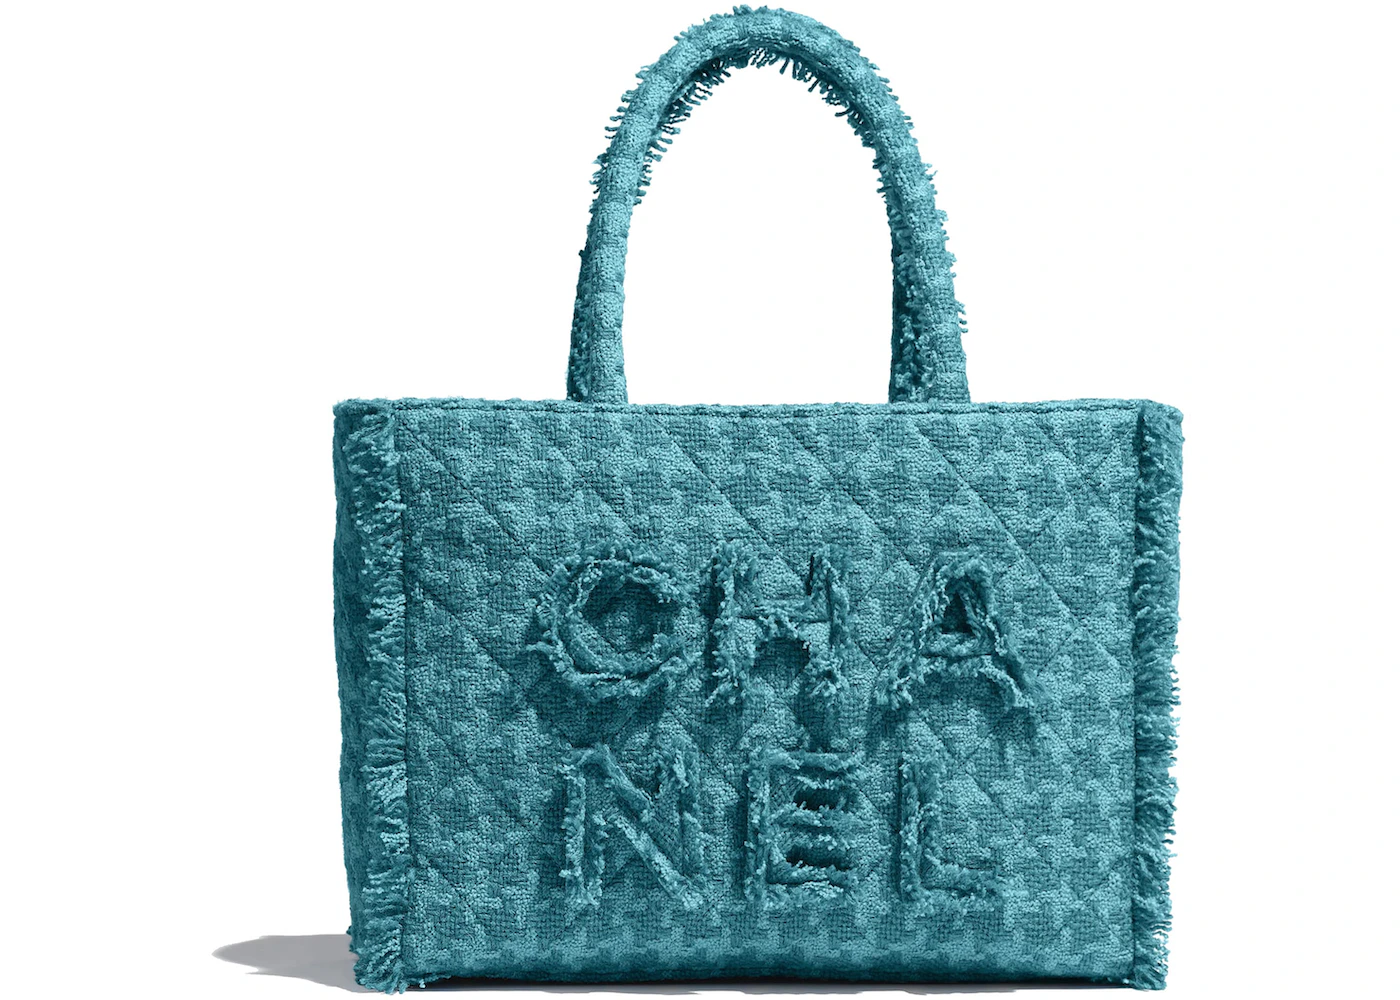 chanel shopping bag purse